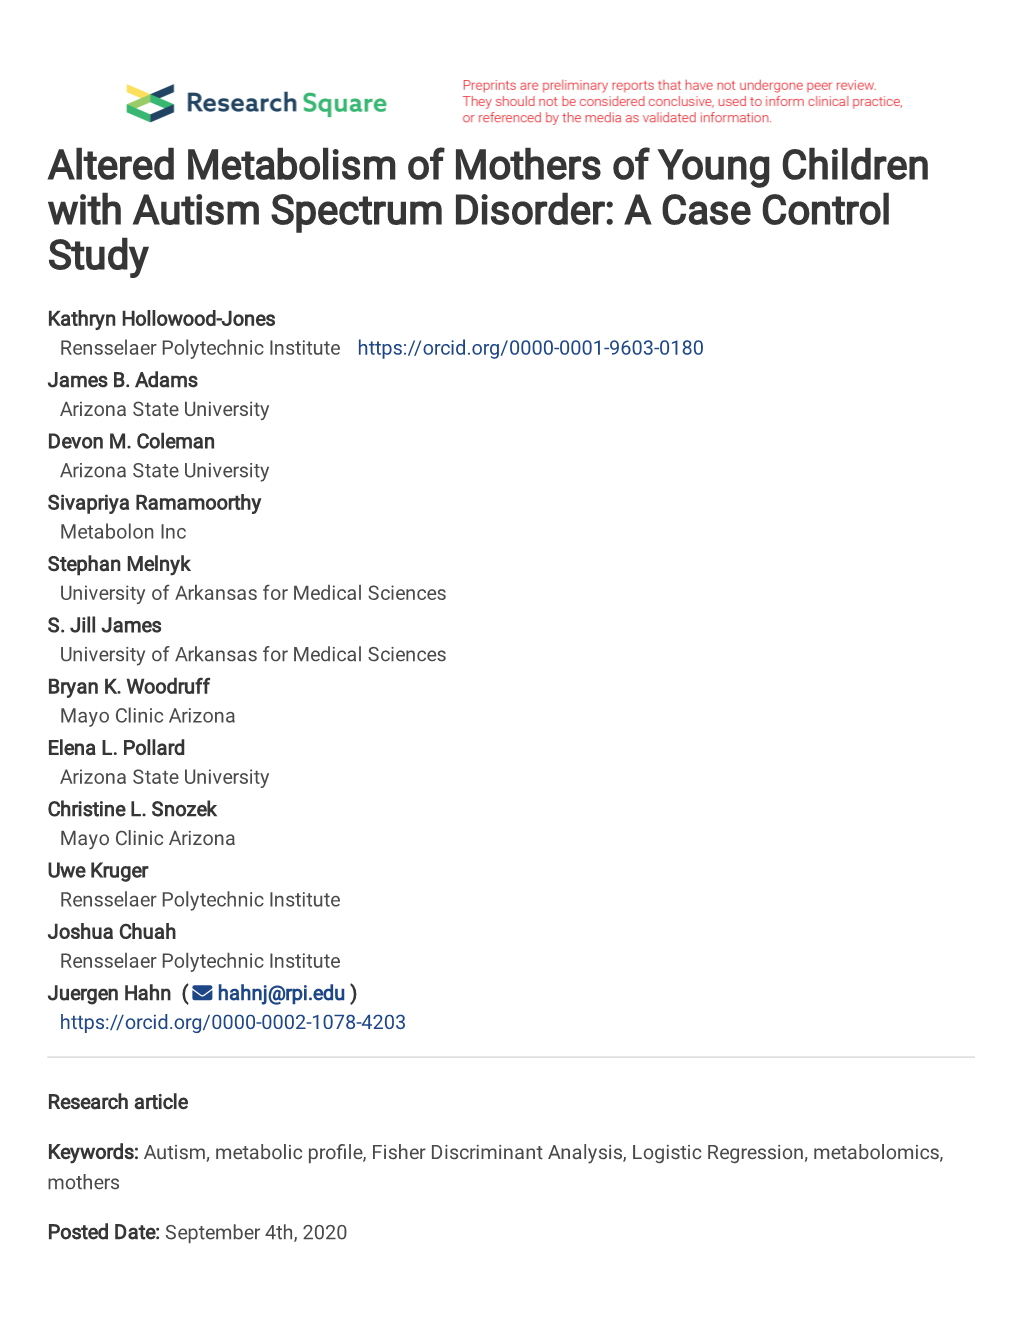 Metbolomics of Mothers of Children with Autism Spectrum Disorder 1